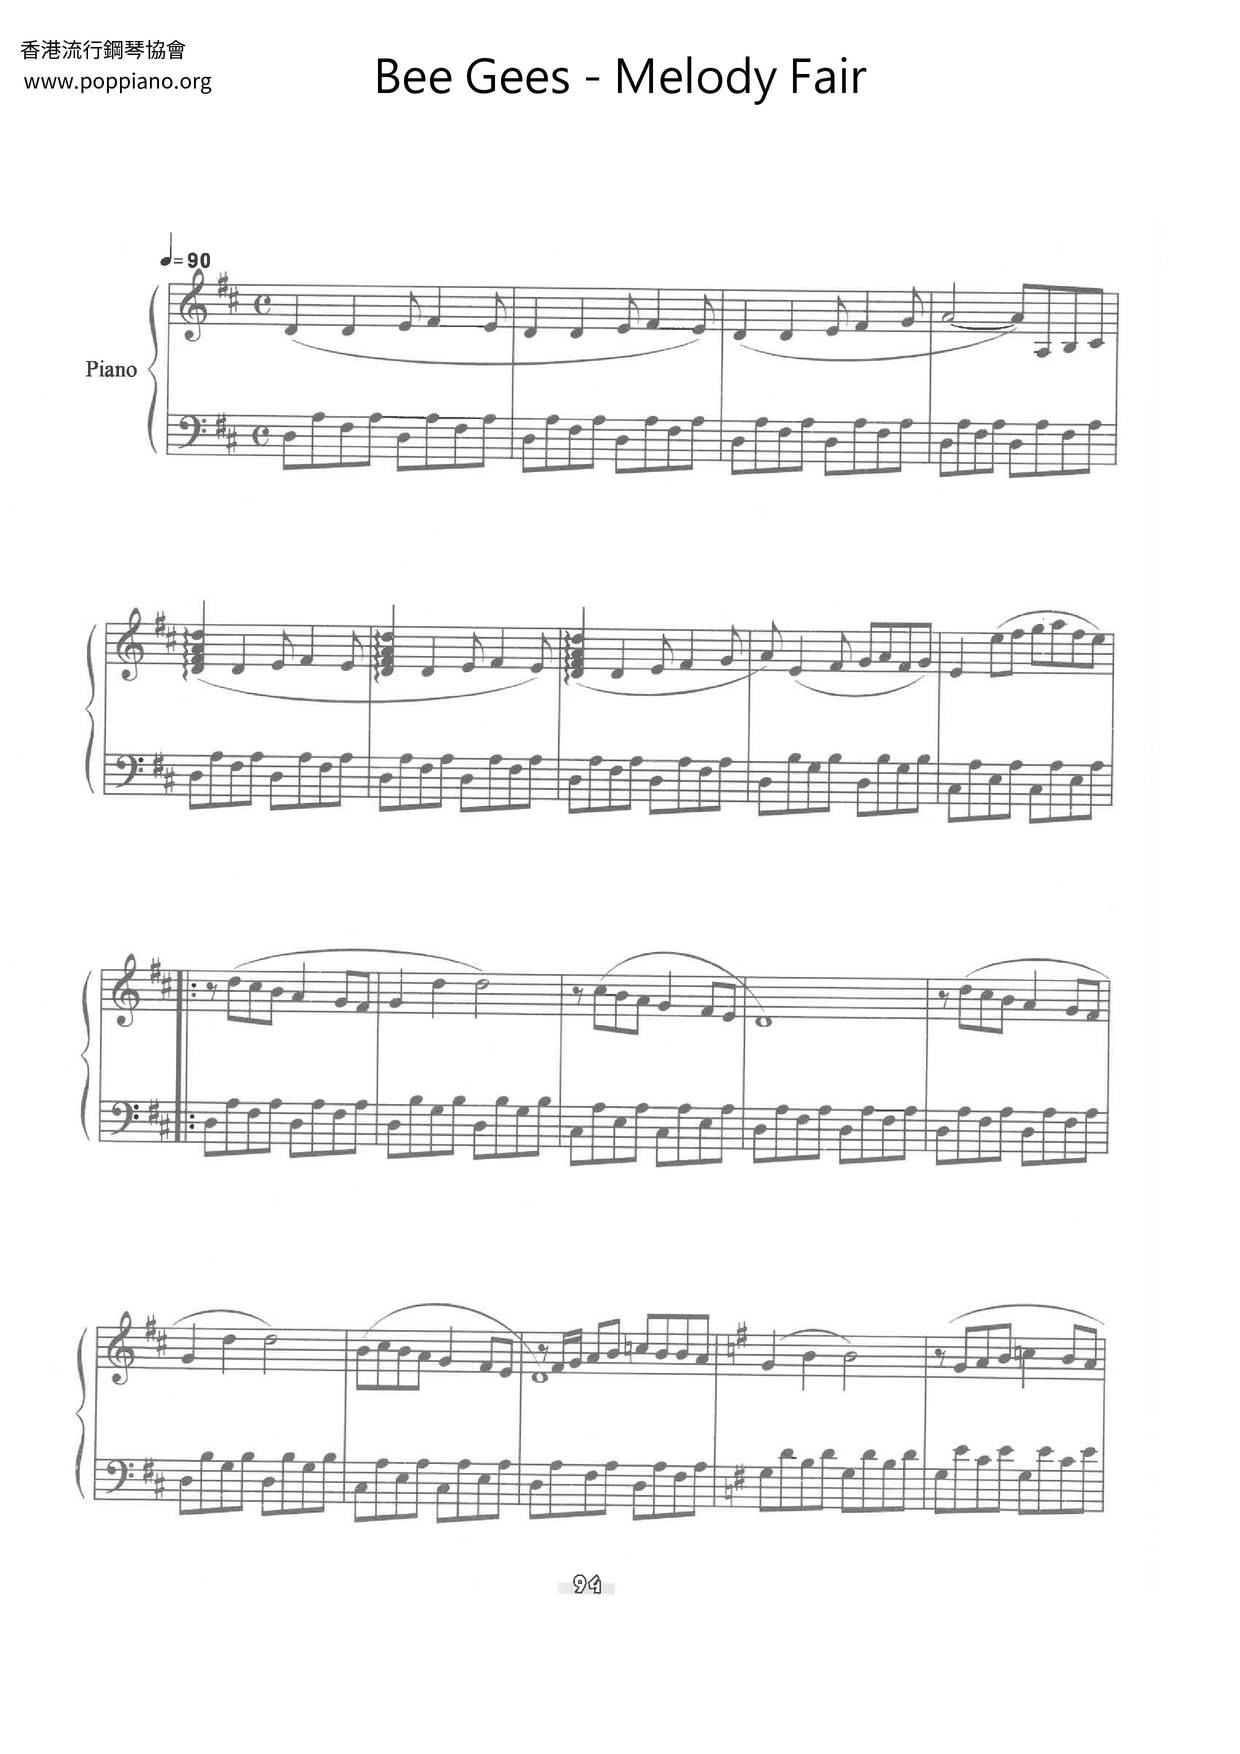 Melody Fairピアノ譜